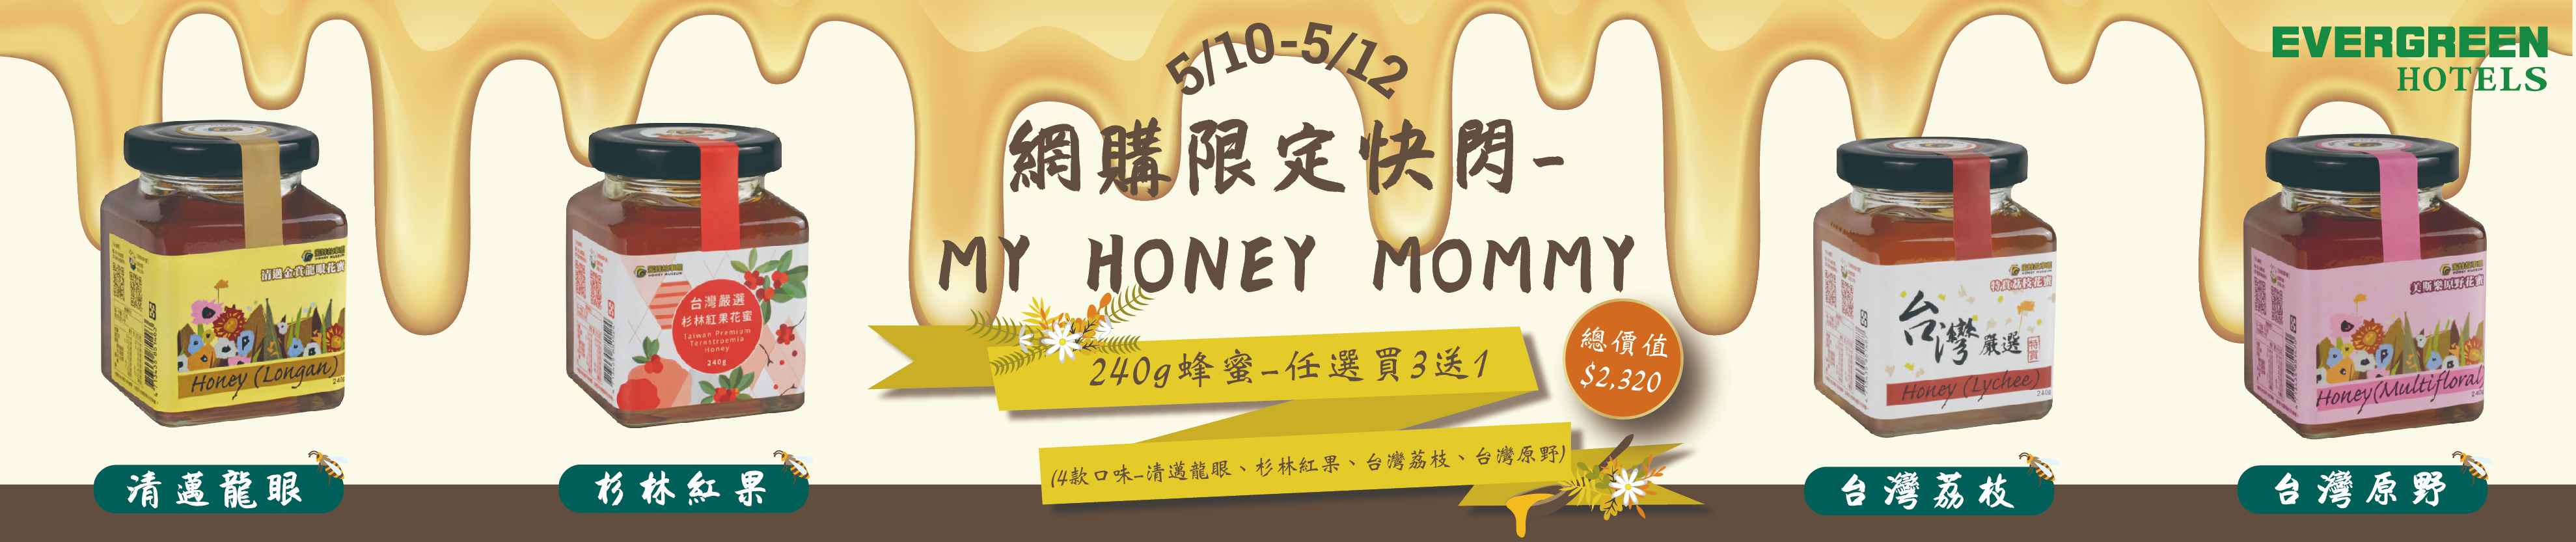 5/10-5/12 網購限定快閃-MY HONEY MOMMY